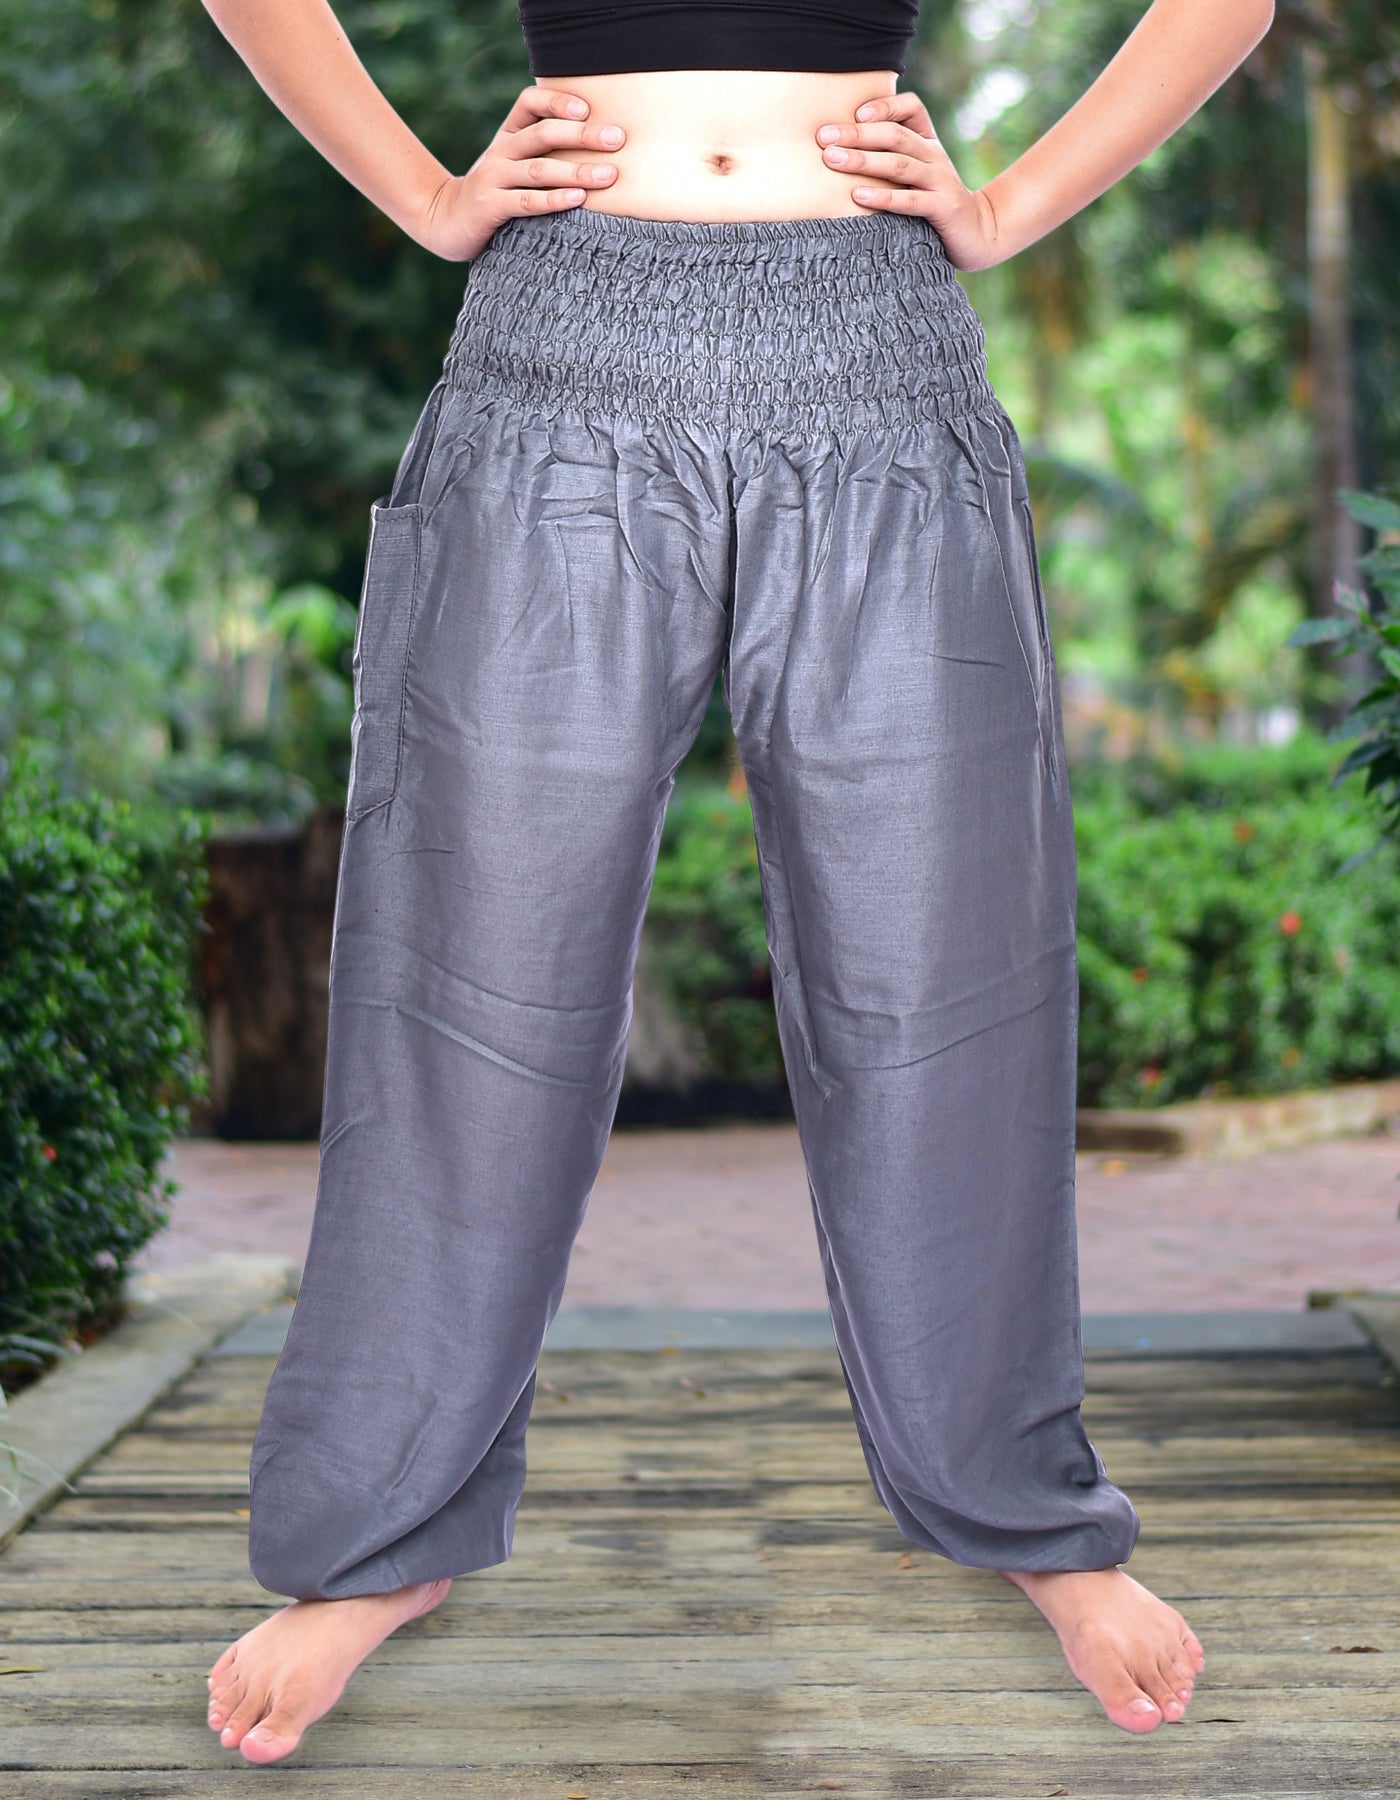 Bohotusk Grey Elephant Grassland Print Petite Slender Fit Womens Harem Pants  Size 4